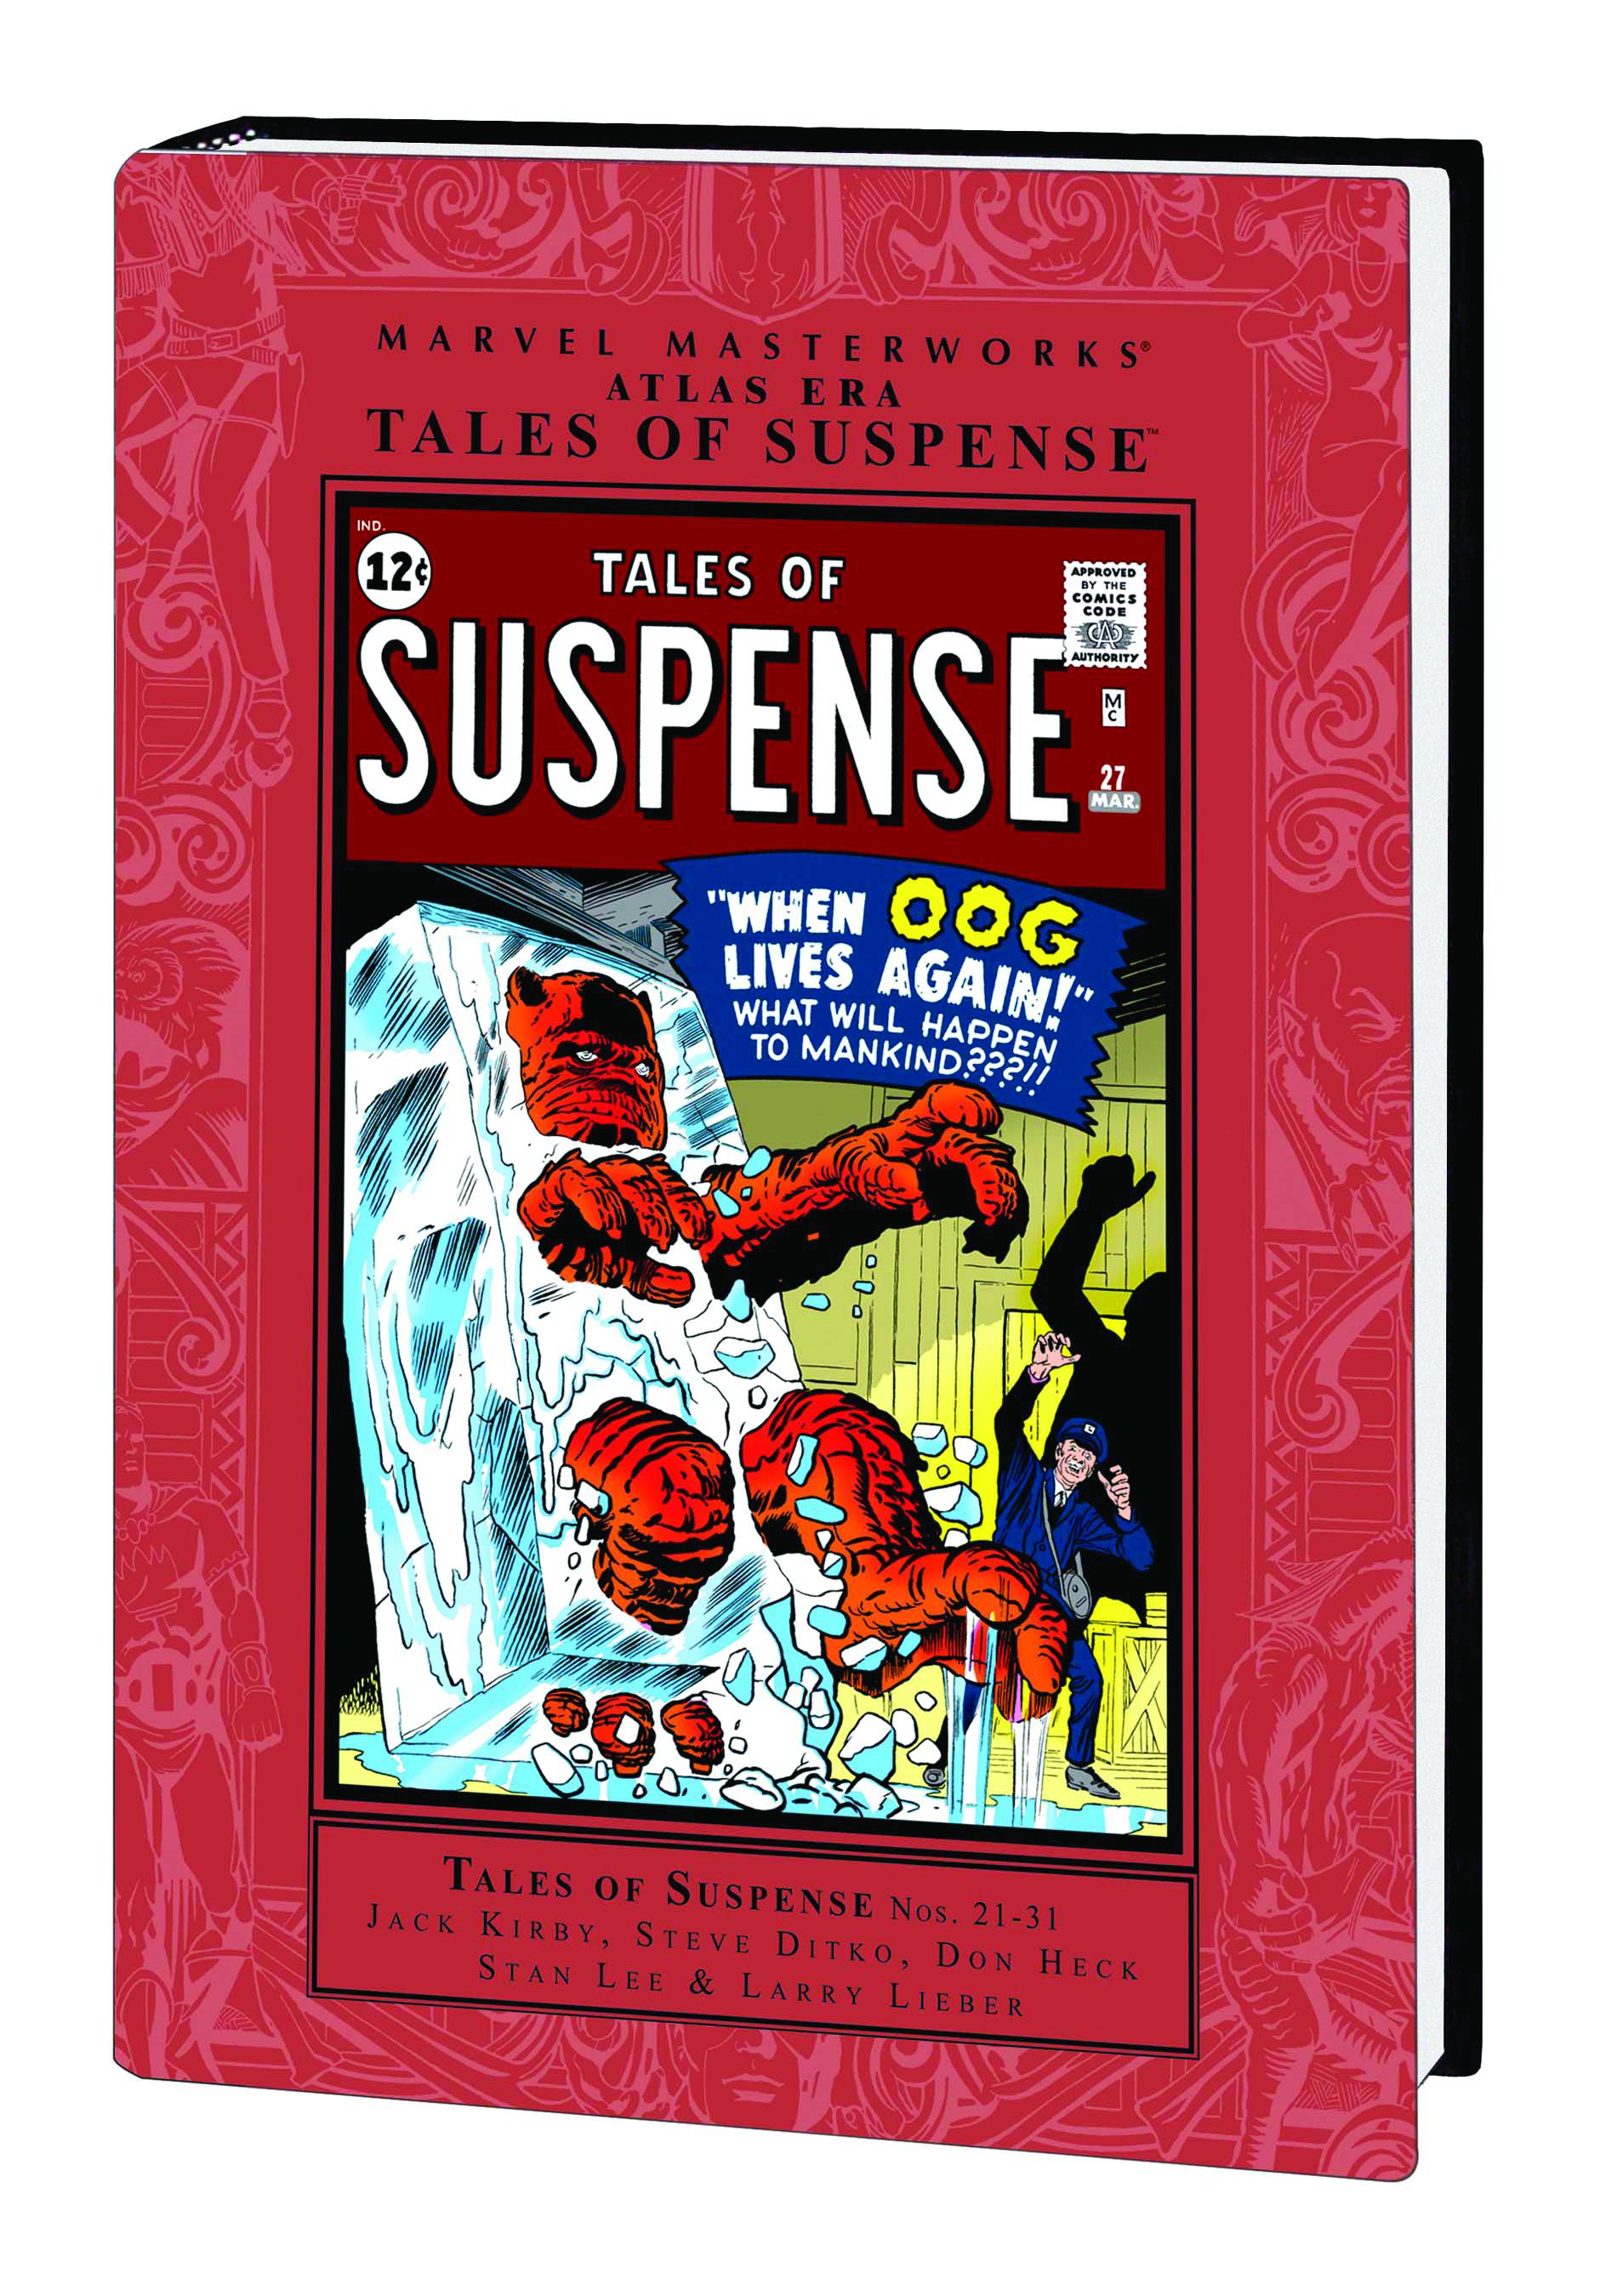 Marvel Masterworks Atlas Era Tales of Suspense Hardcover Volume 3